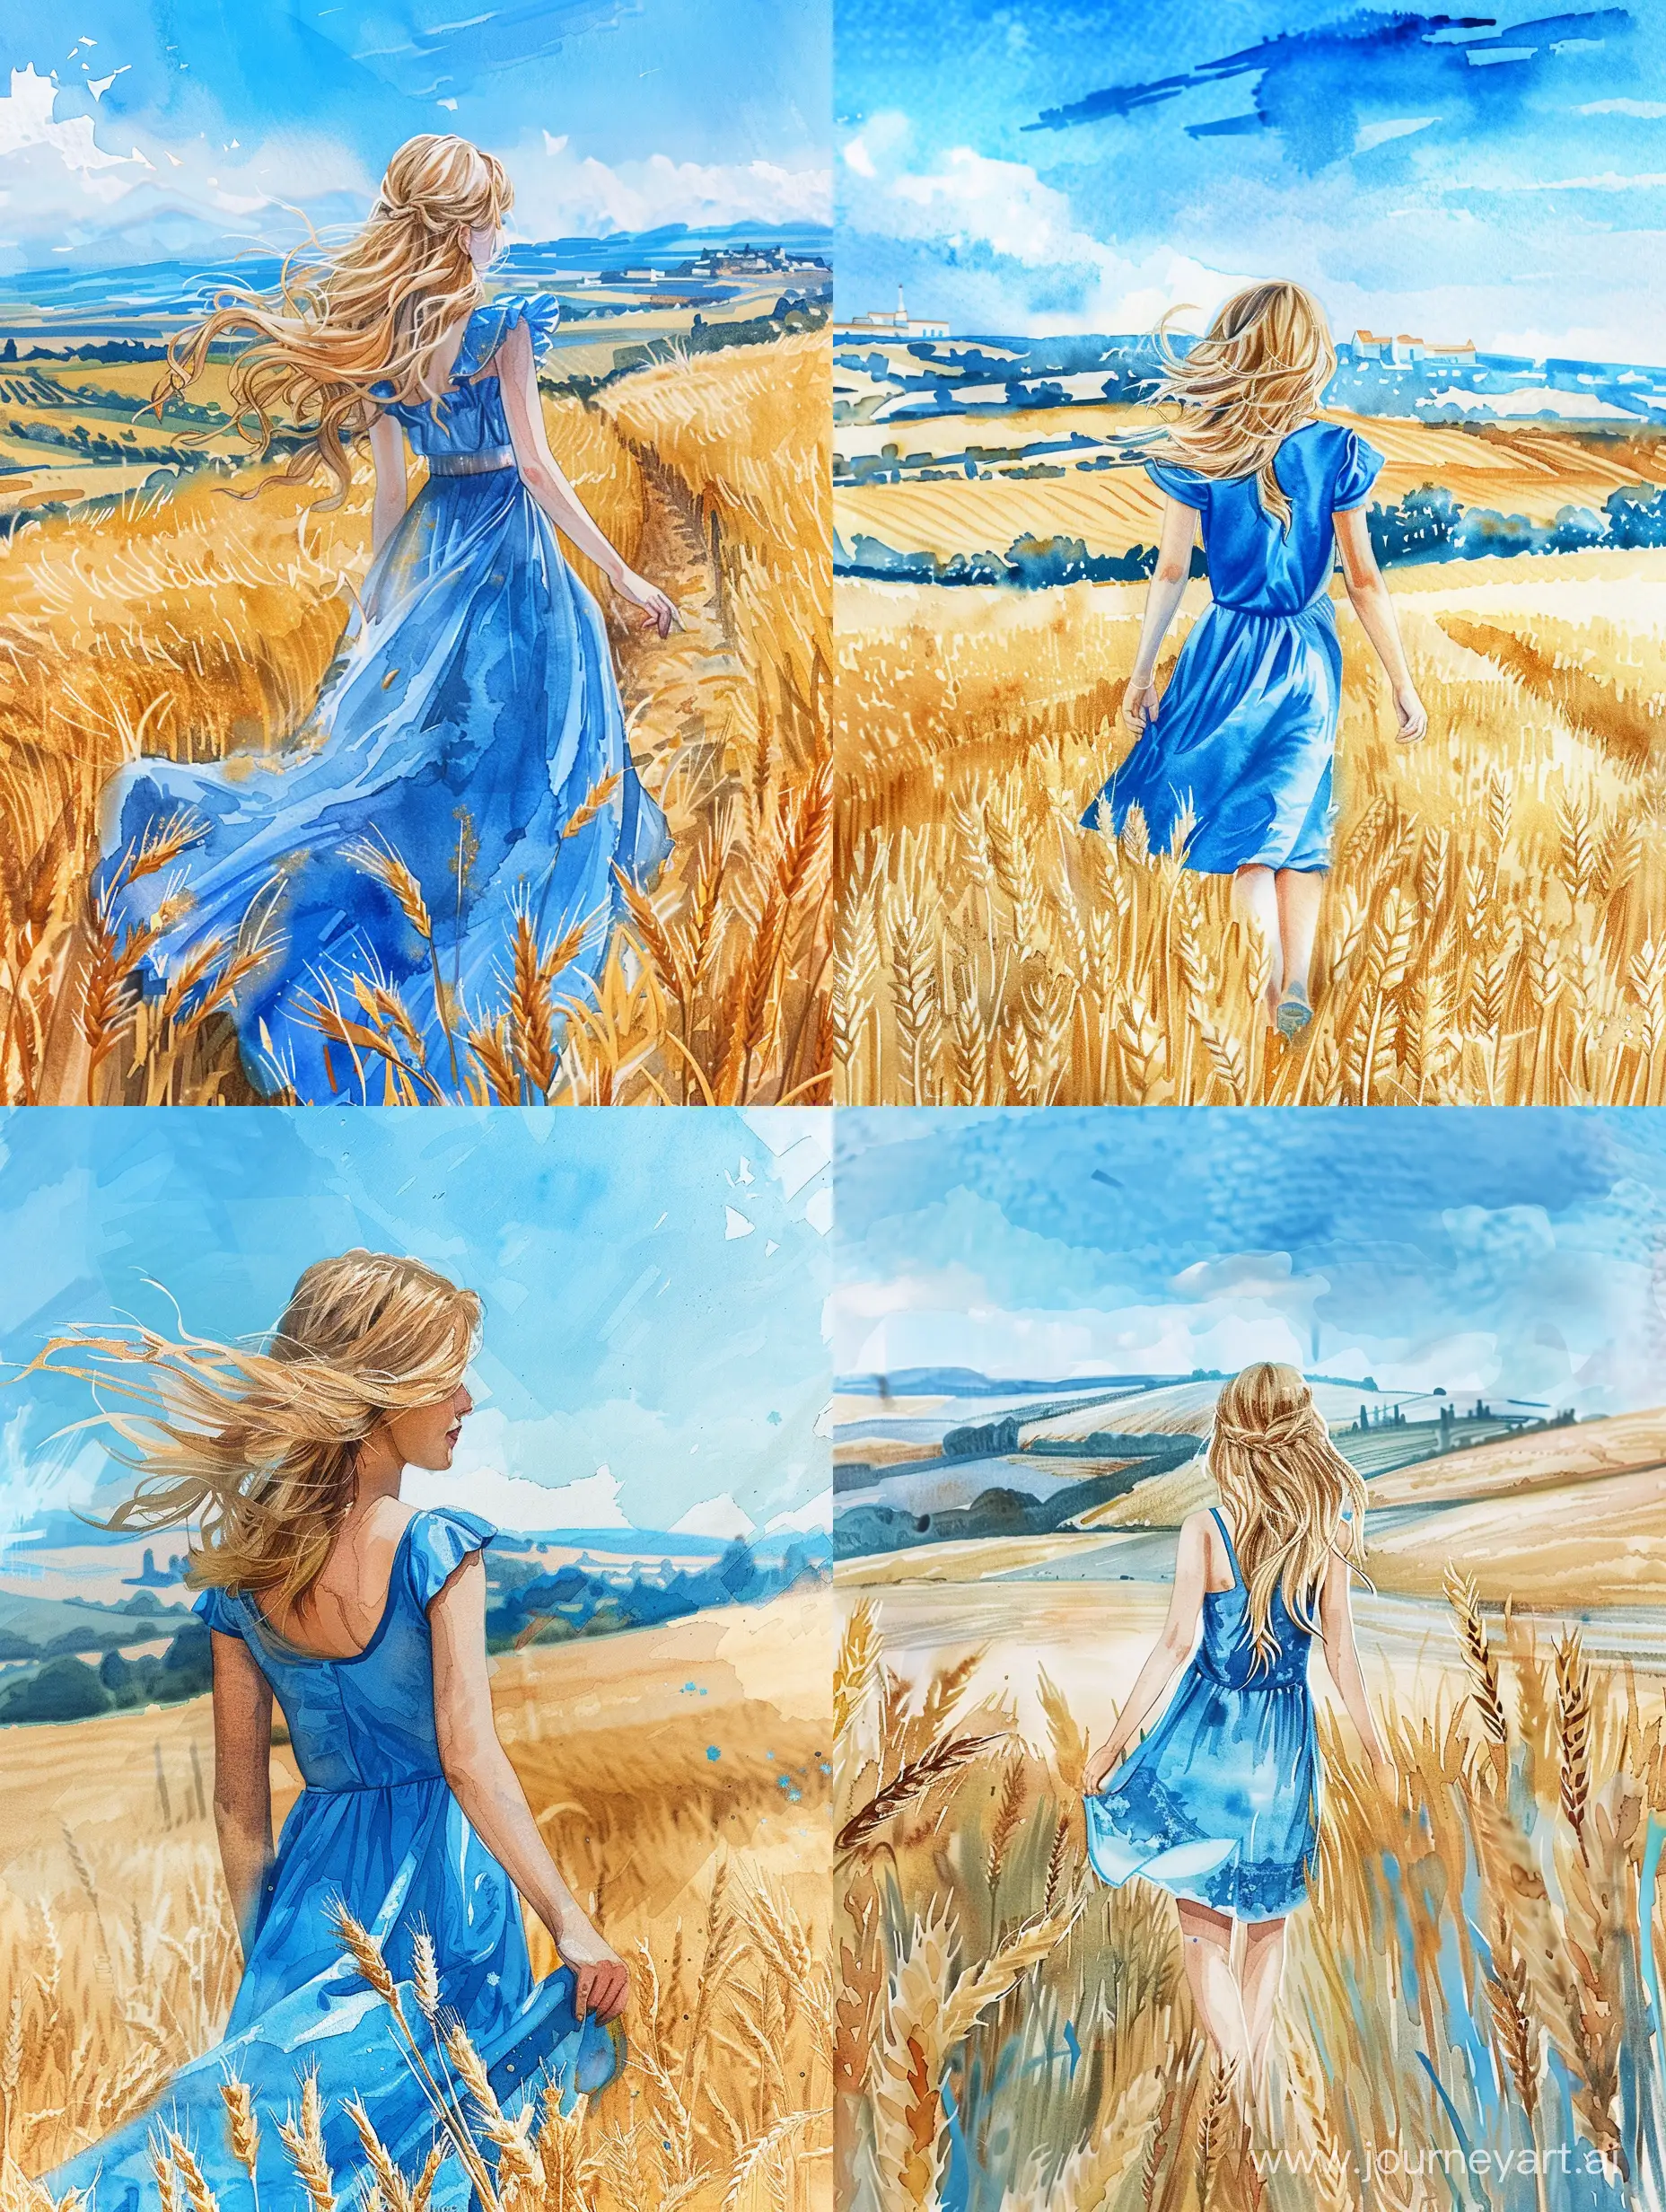 Enchanting-Blonde-in-Blue-Dress-Strolling-Through-Vibrant-Wheat-Field